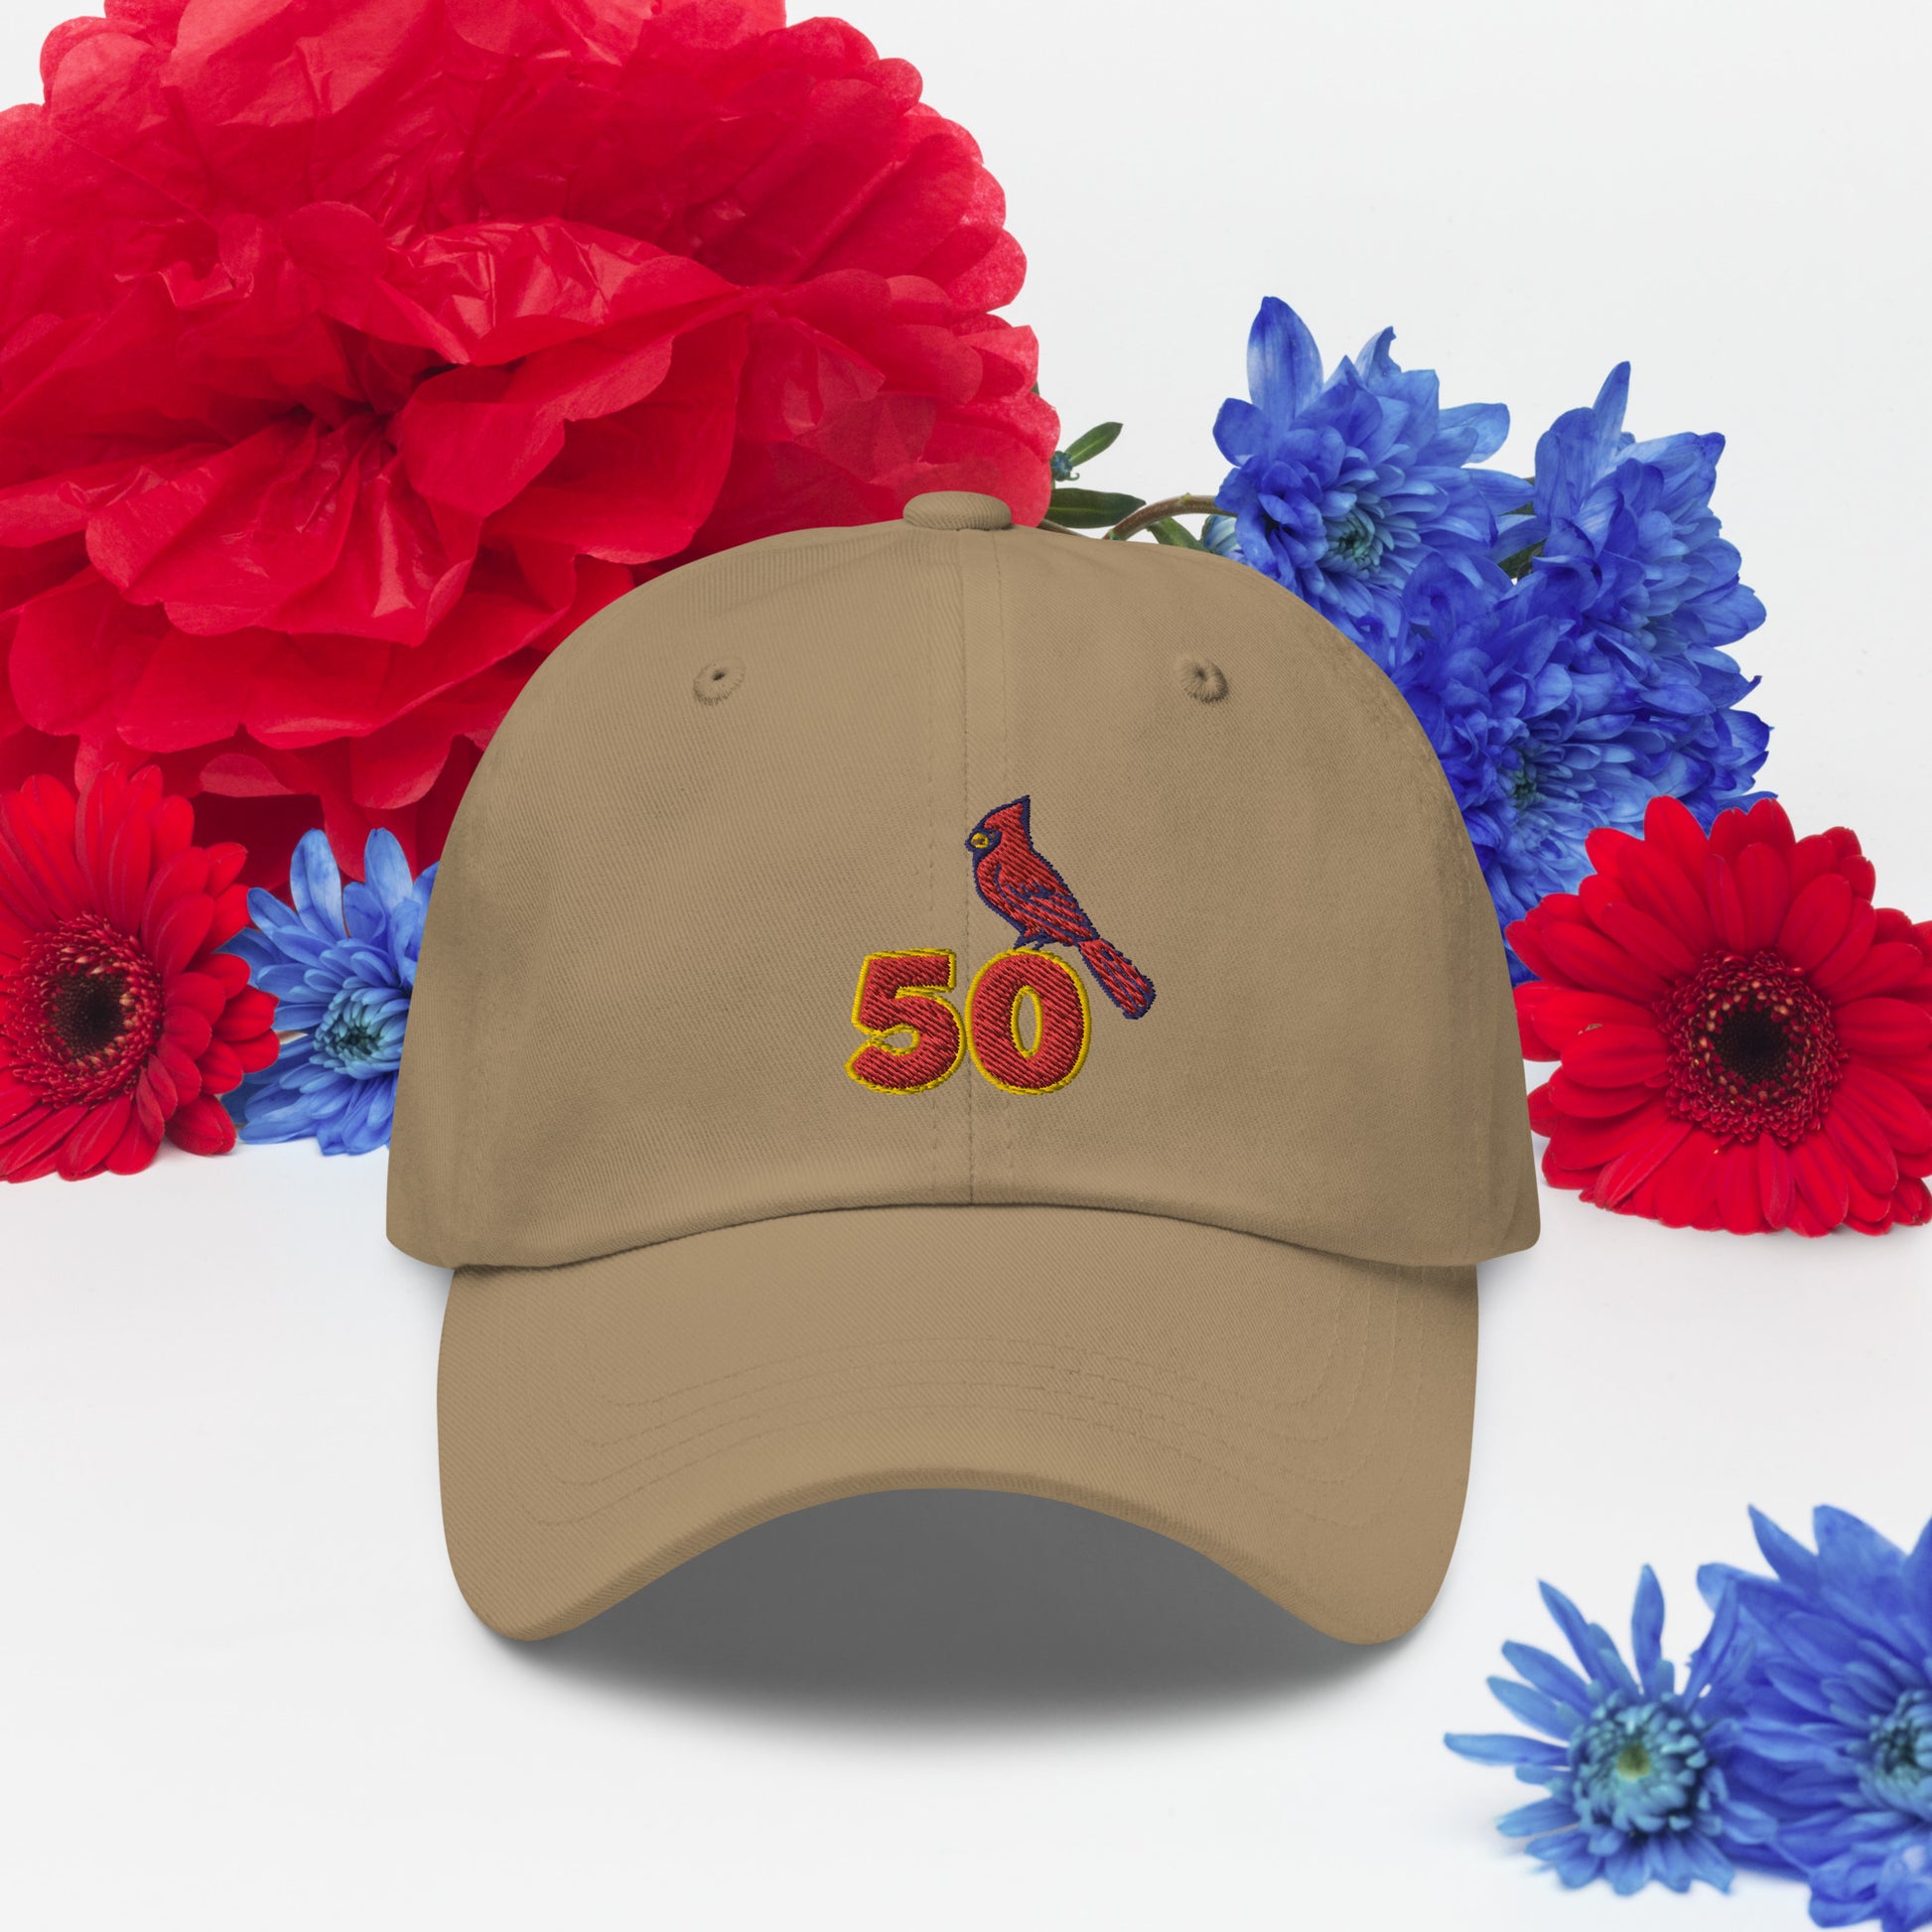 Adam Wainwright Hat / Waino Hat / St. Louis Cardinals Dad hat